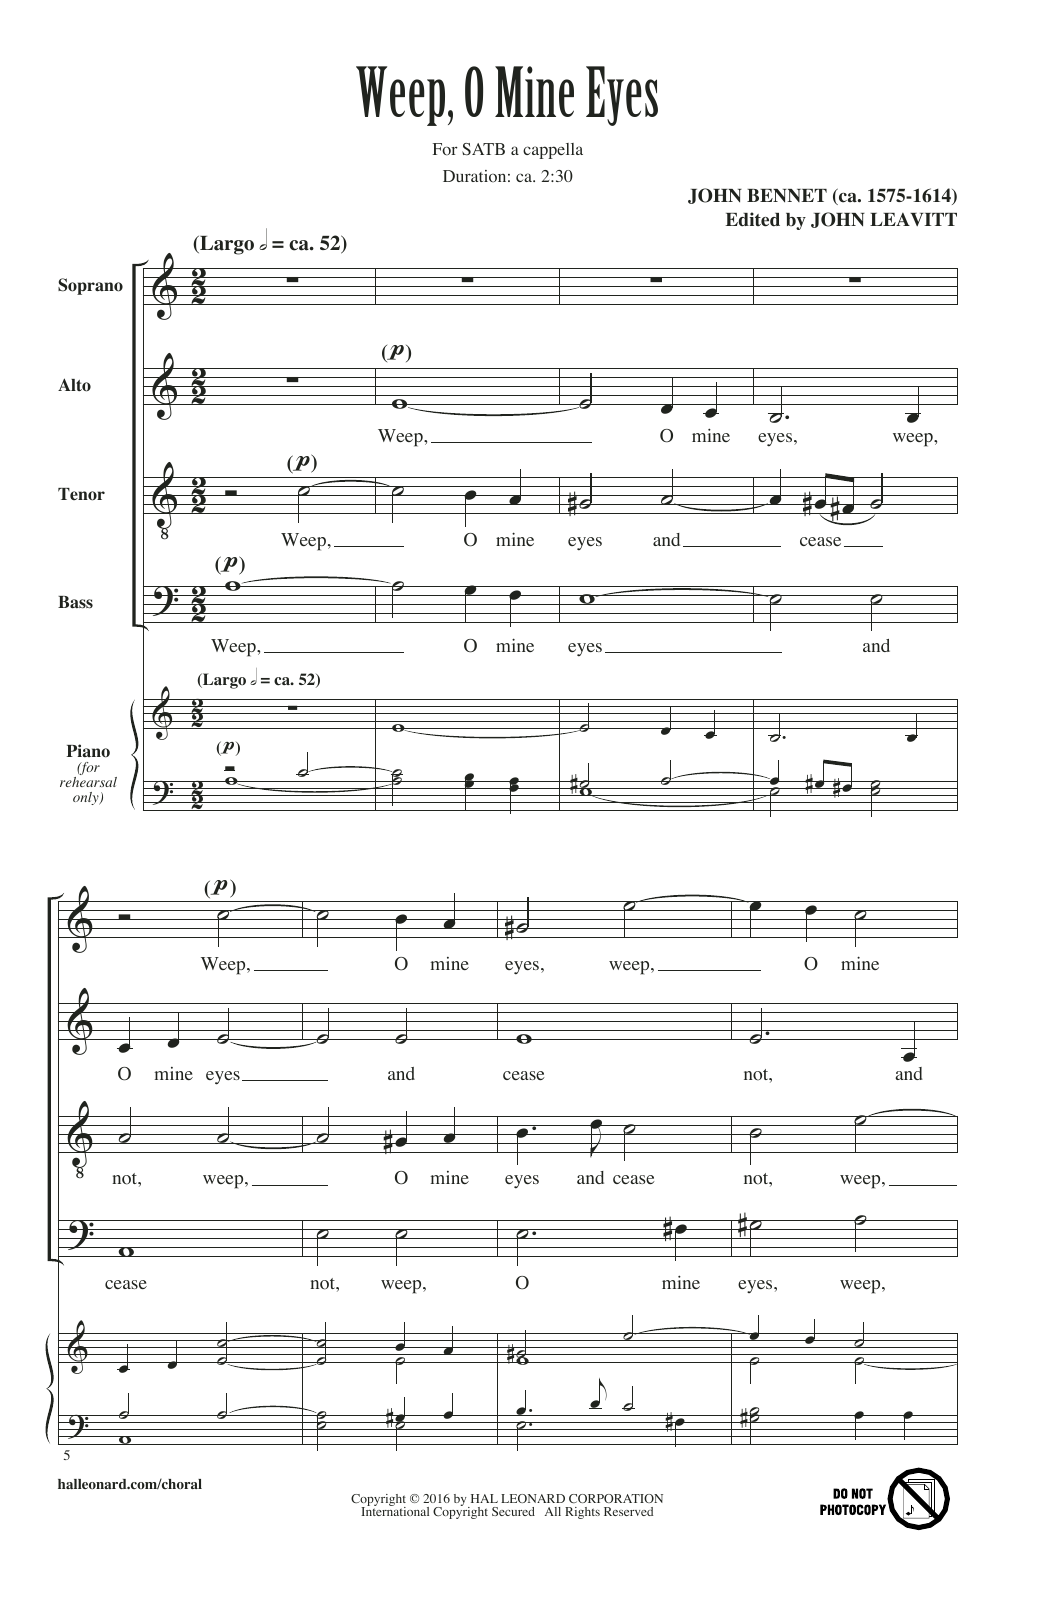 John Leavitt Weep, O Mine Eyes Sheet Music Notes & Chords for SATB - Download or Print PDF